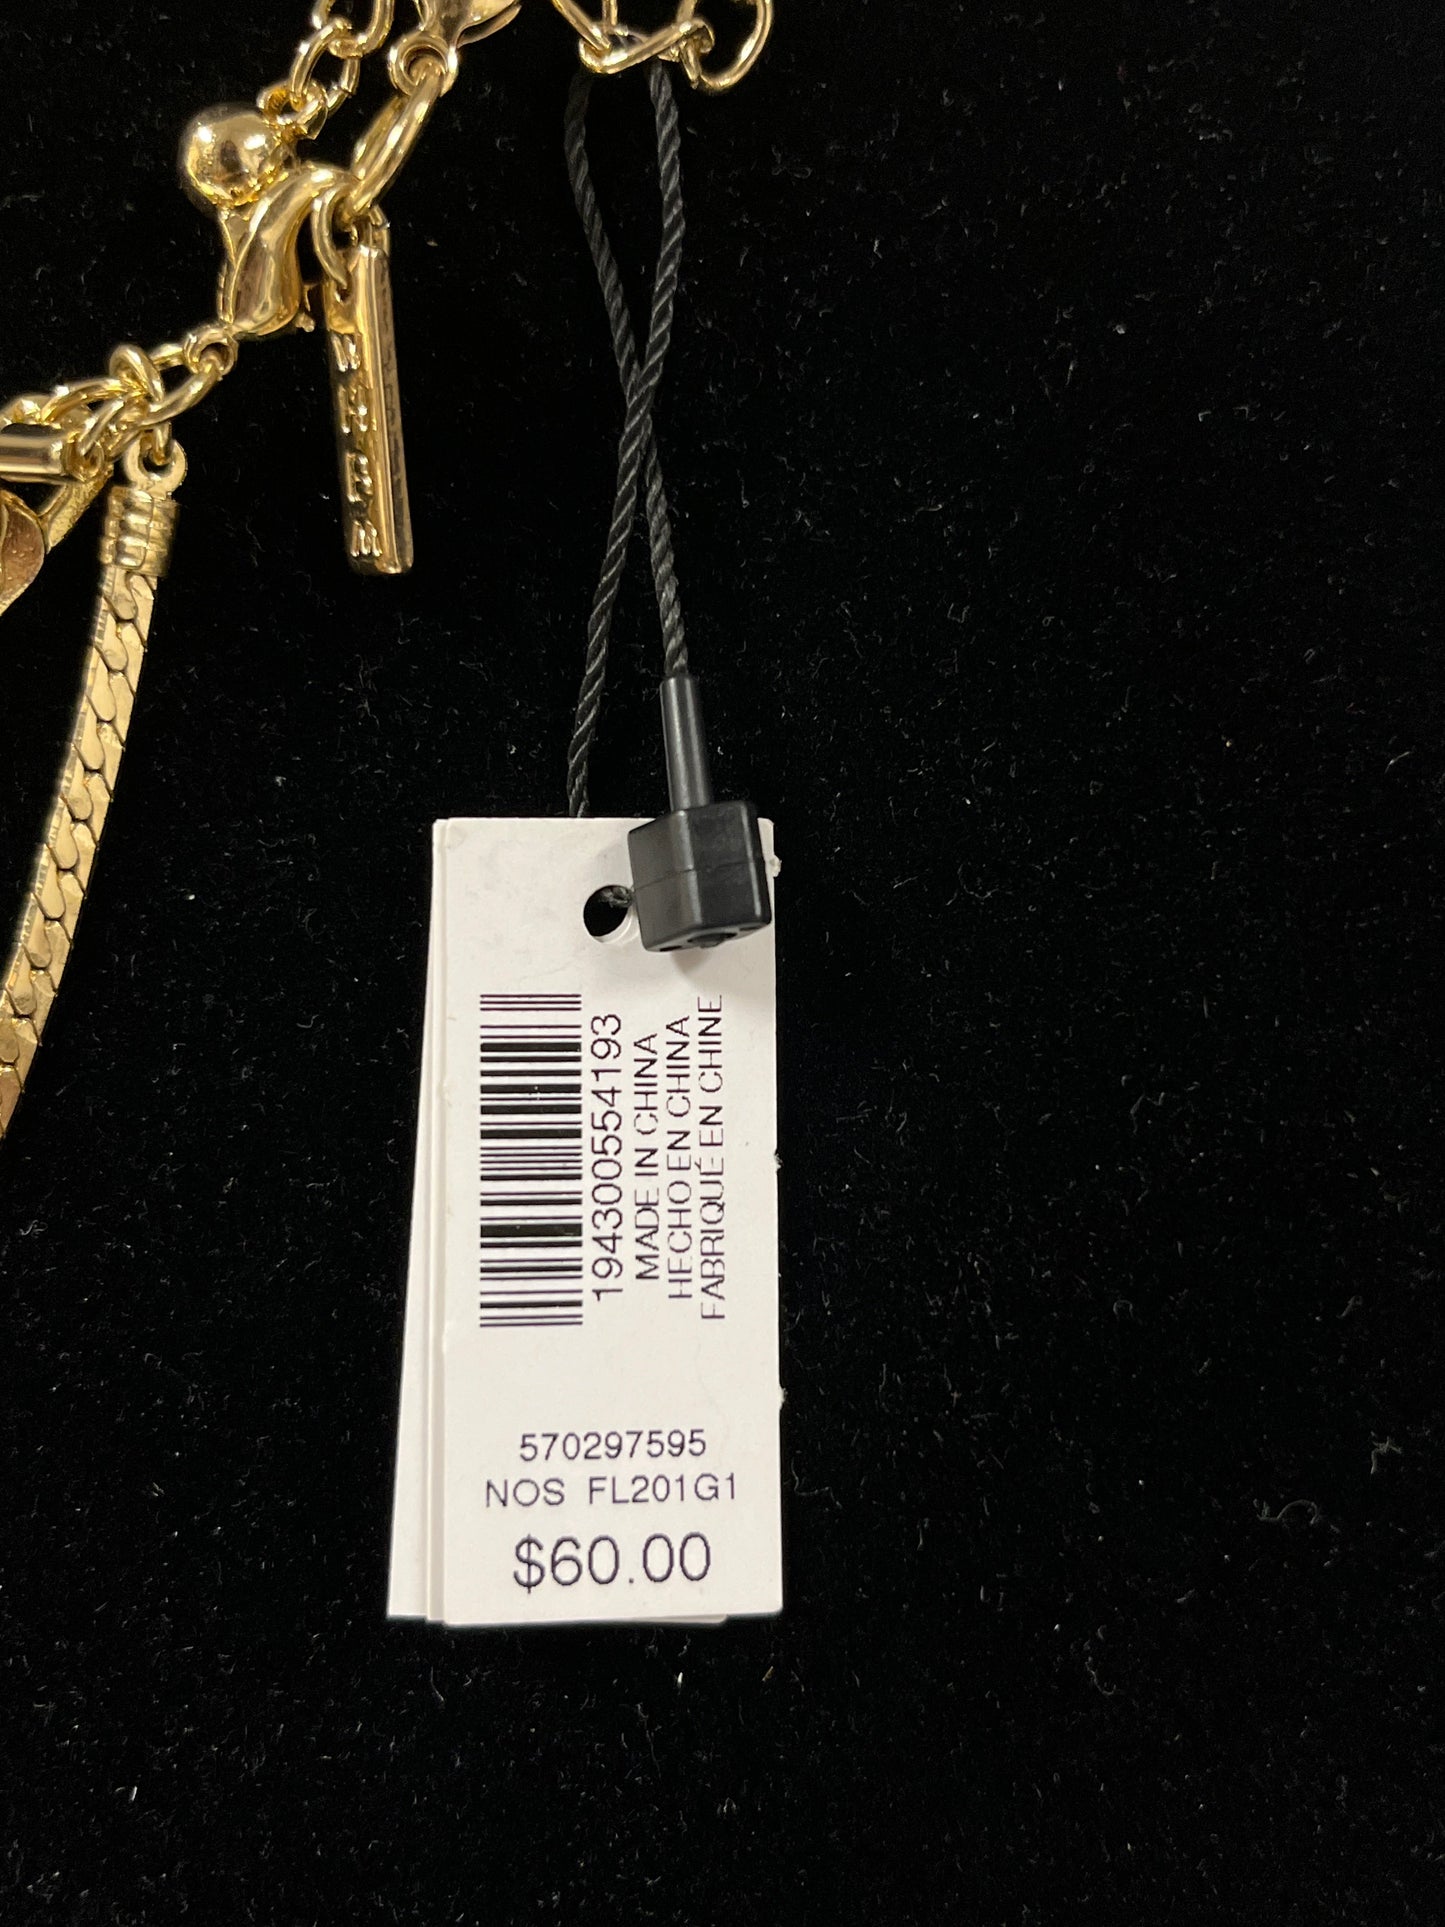 Necklace Chain White House Black Market, Size 1